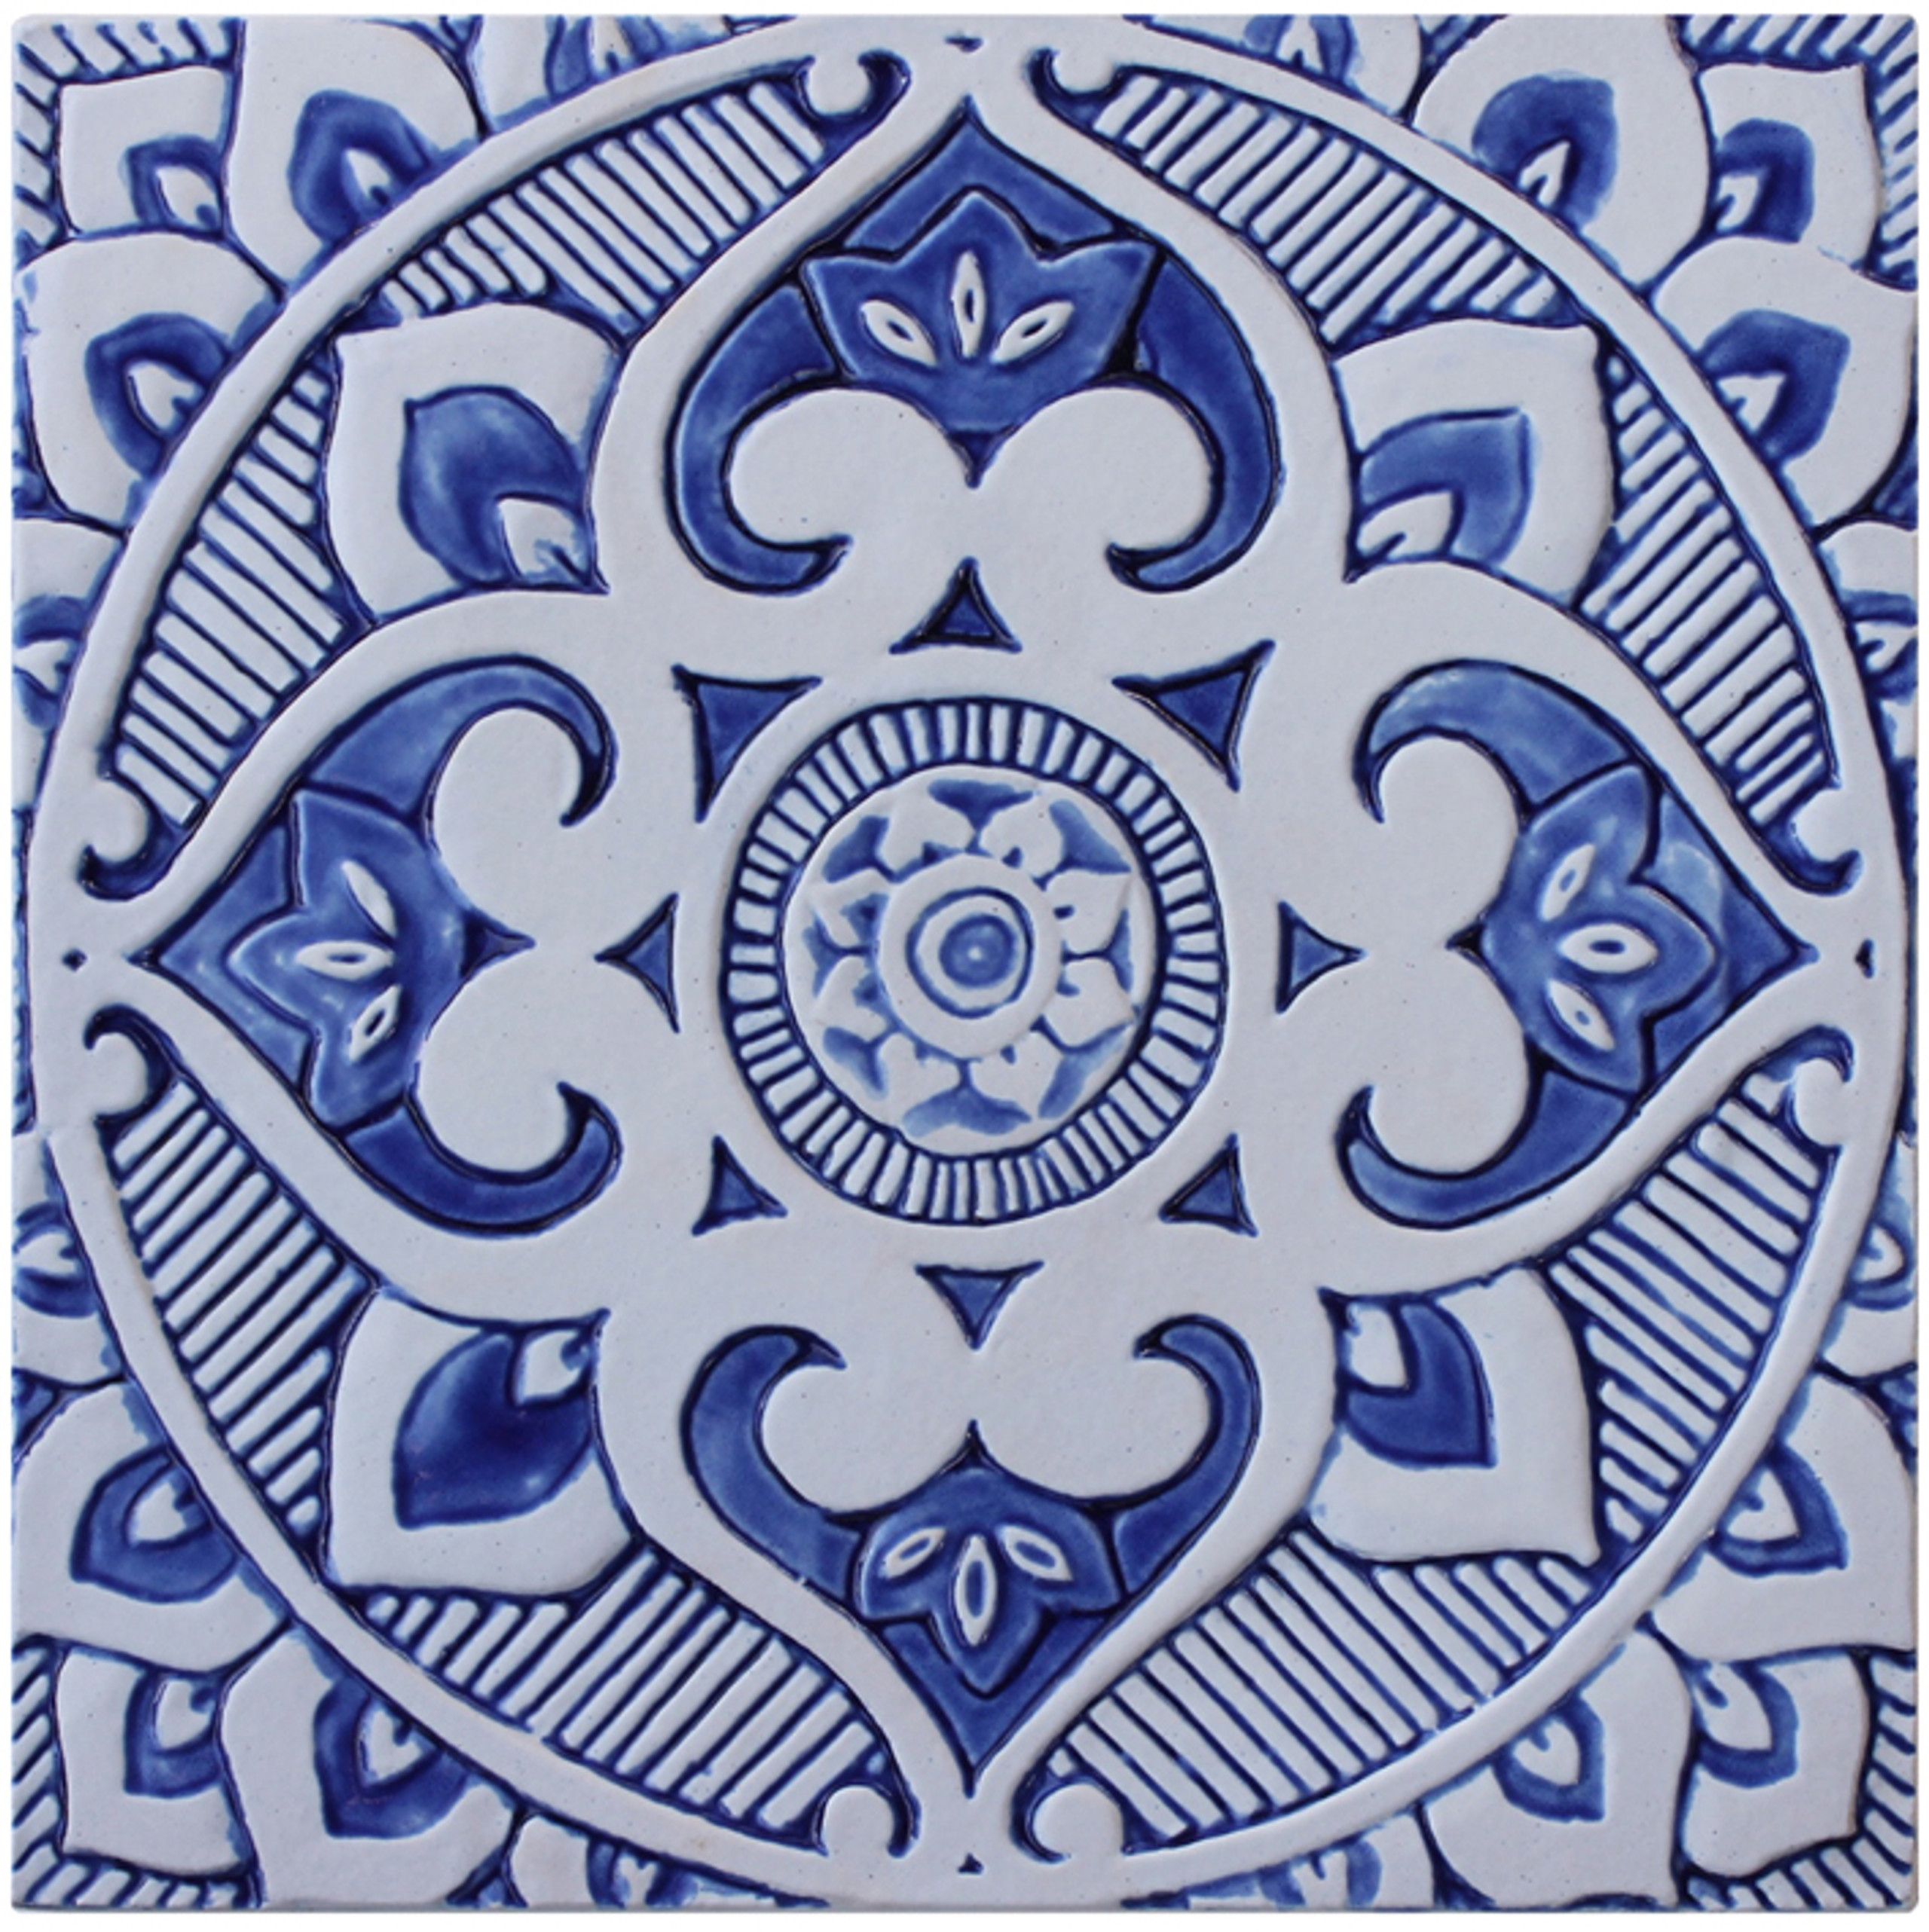 Ceramic mosaic tiles - Spanish tiles - Blue and white tiles by GVEGA